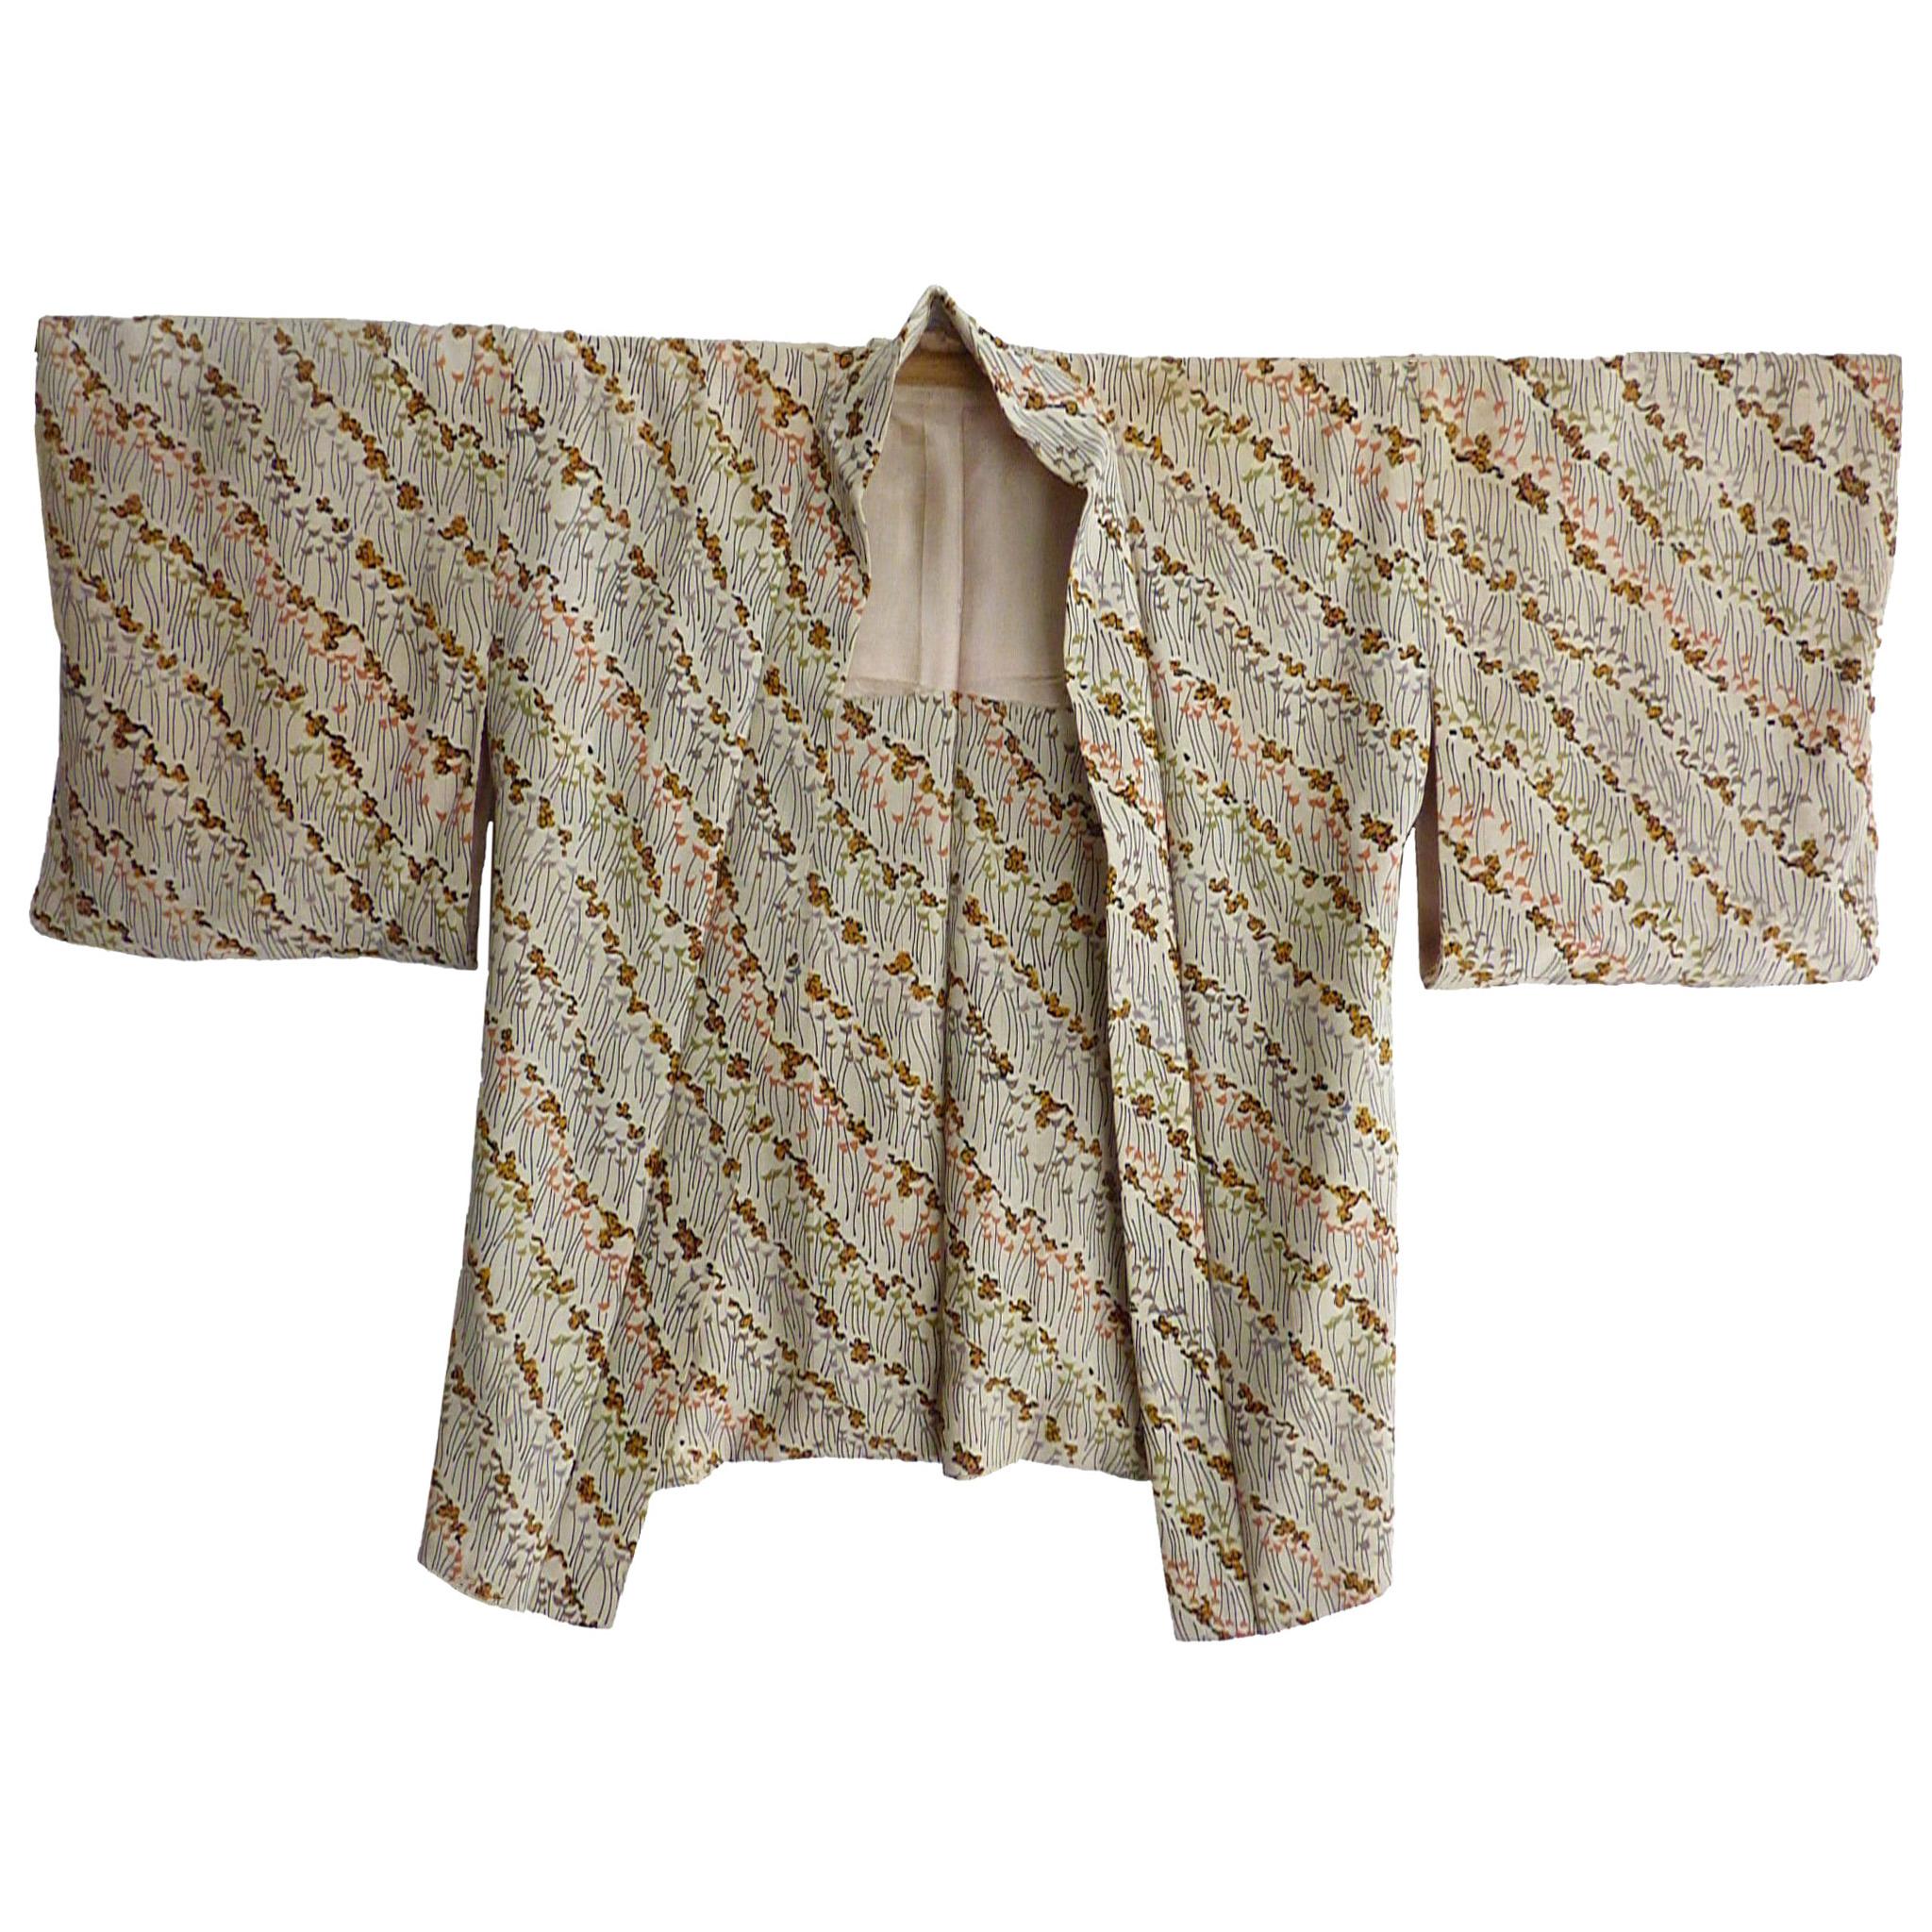 Japanese vintage wheatgrass print all silk handmade kimono